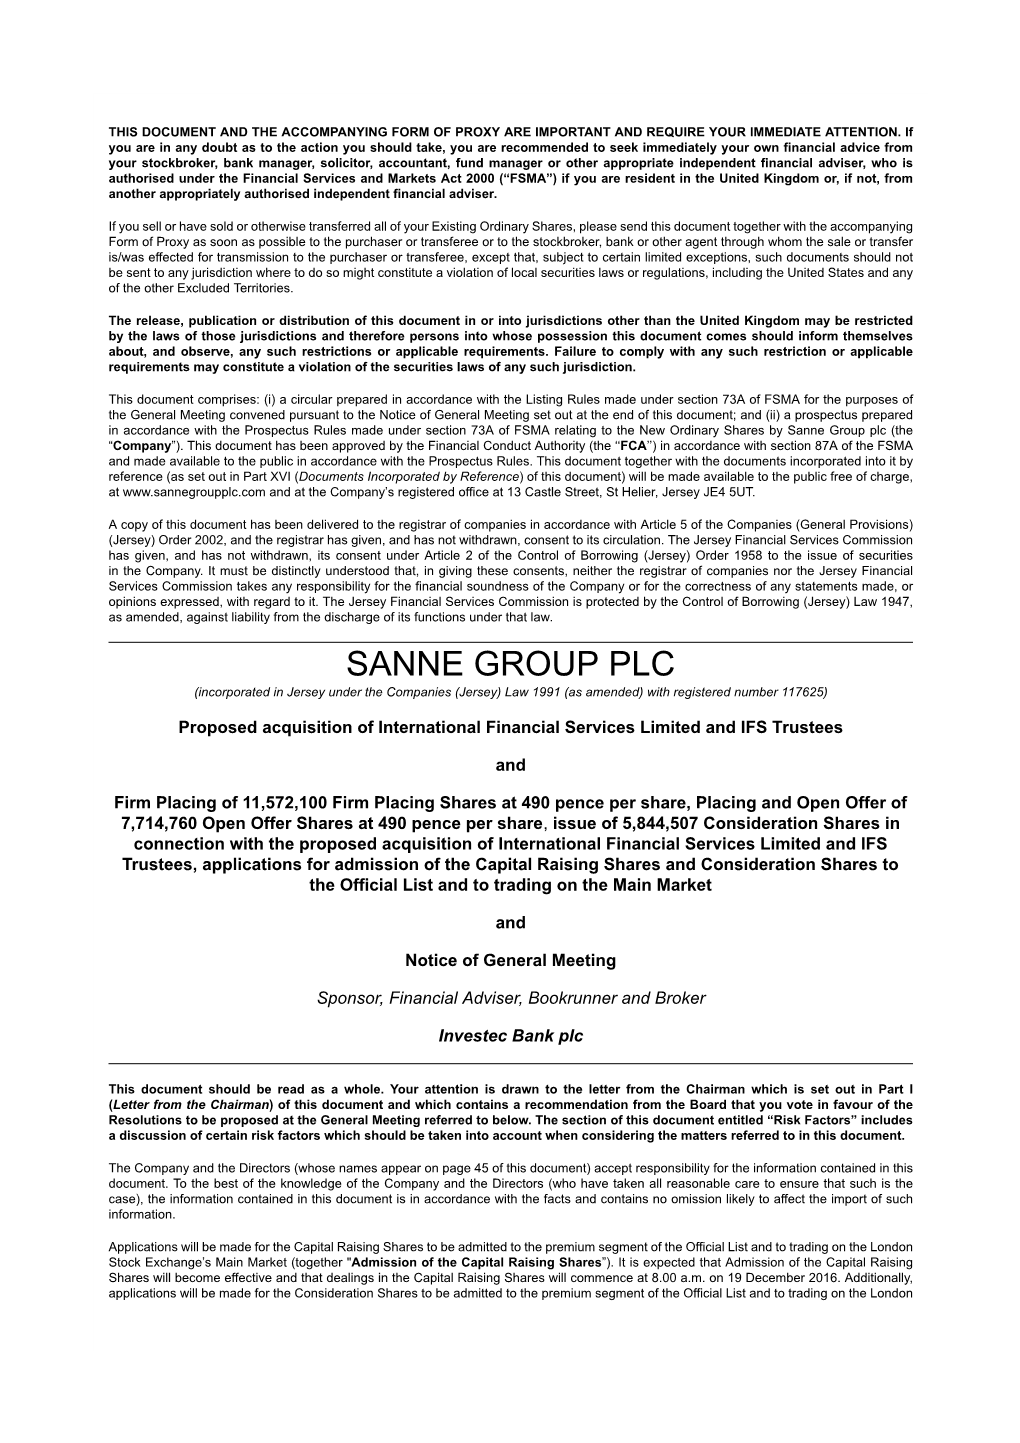 Sanne Group Plc (The “Company”)